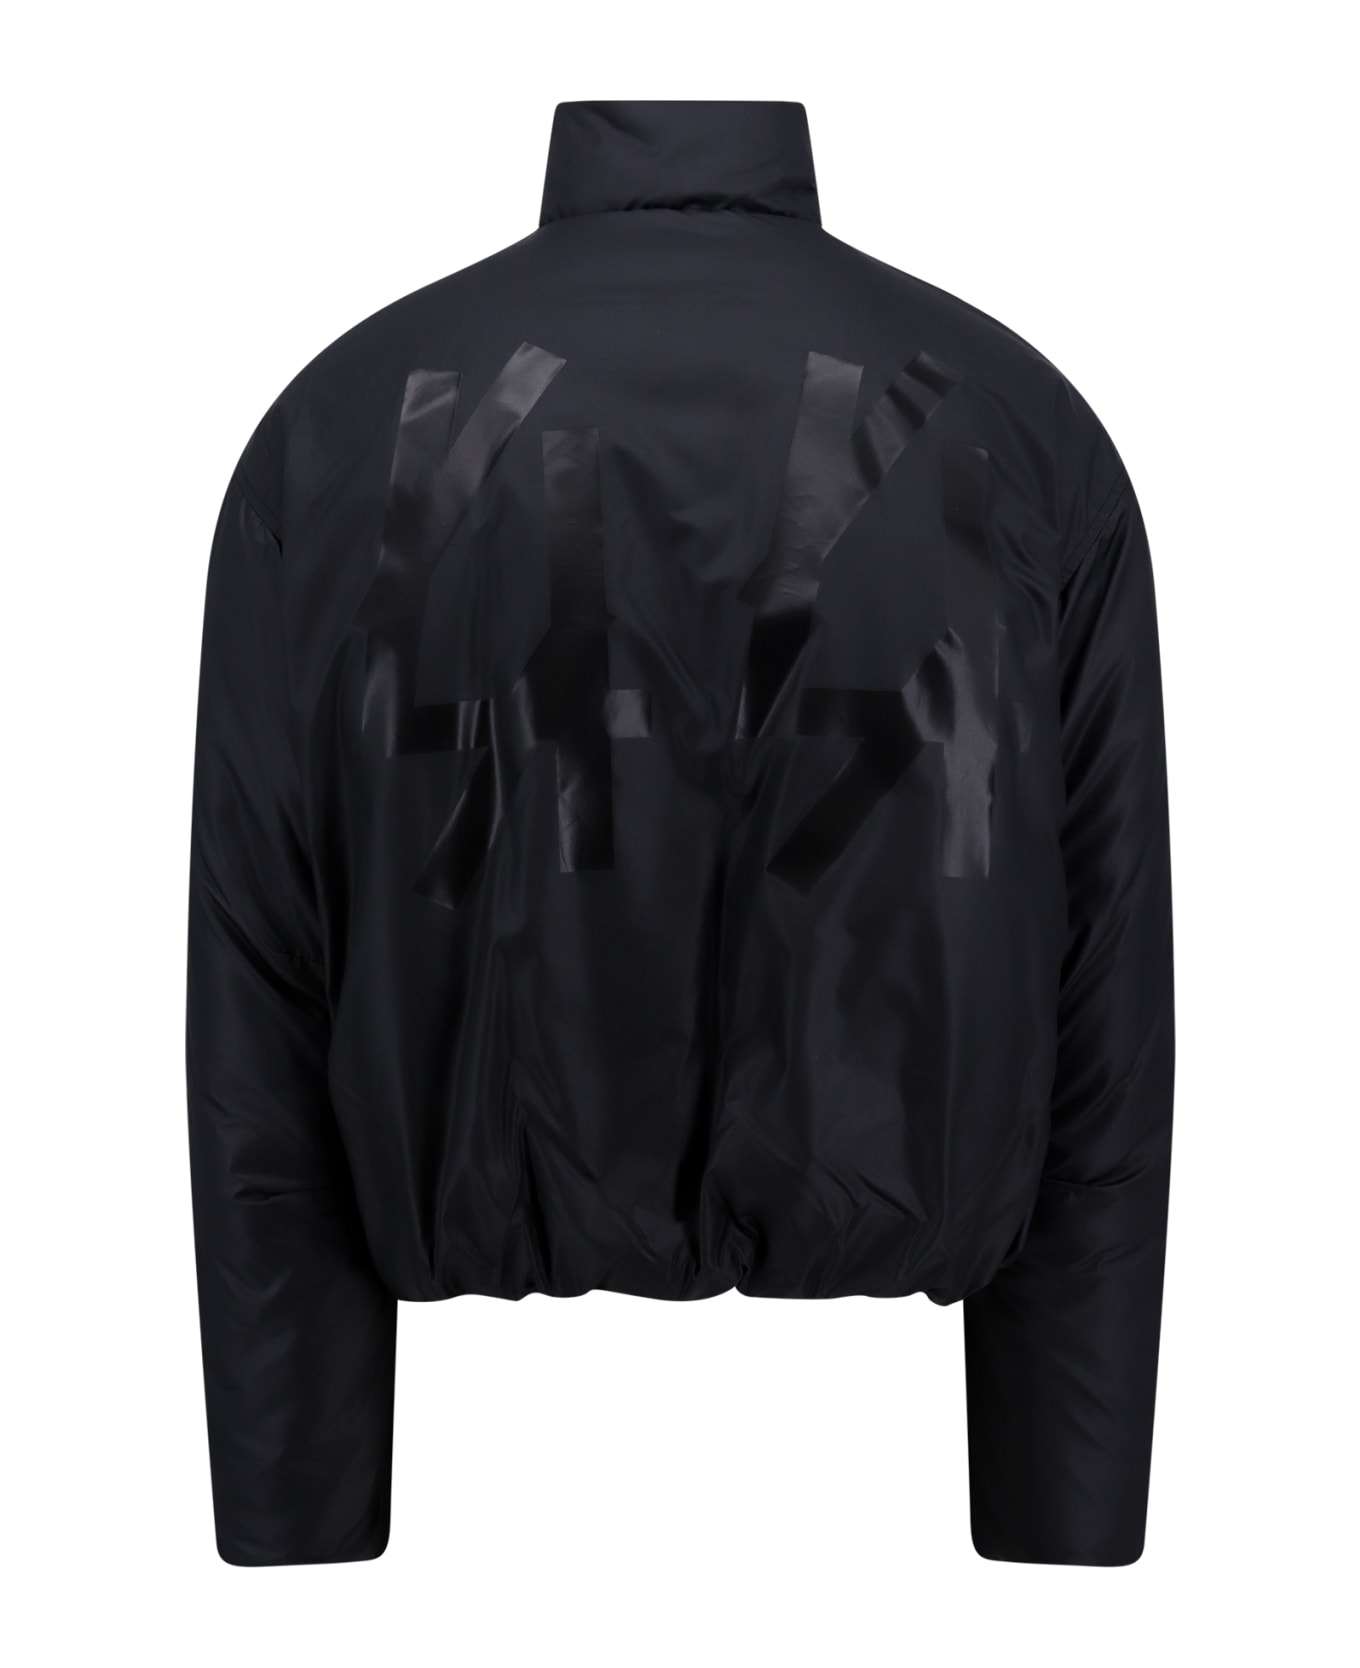 44 Label Group Jacket Jacket - BLACK ジャケット